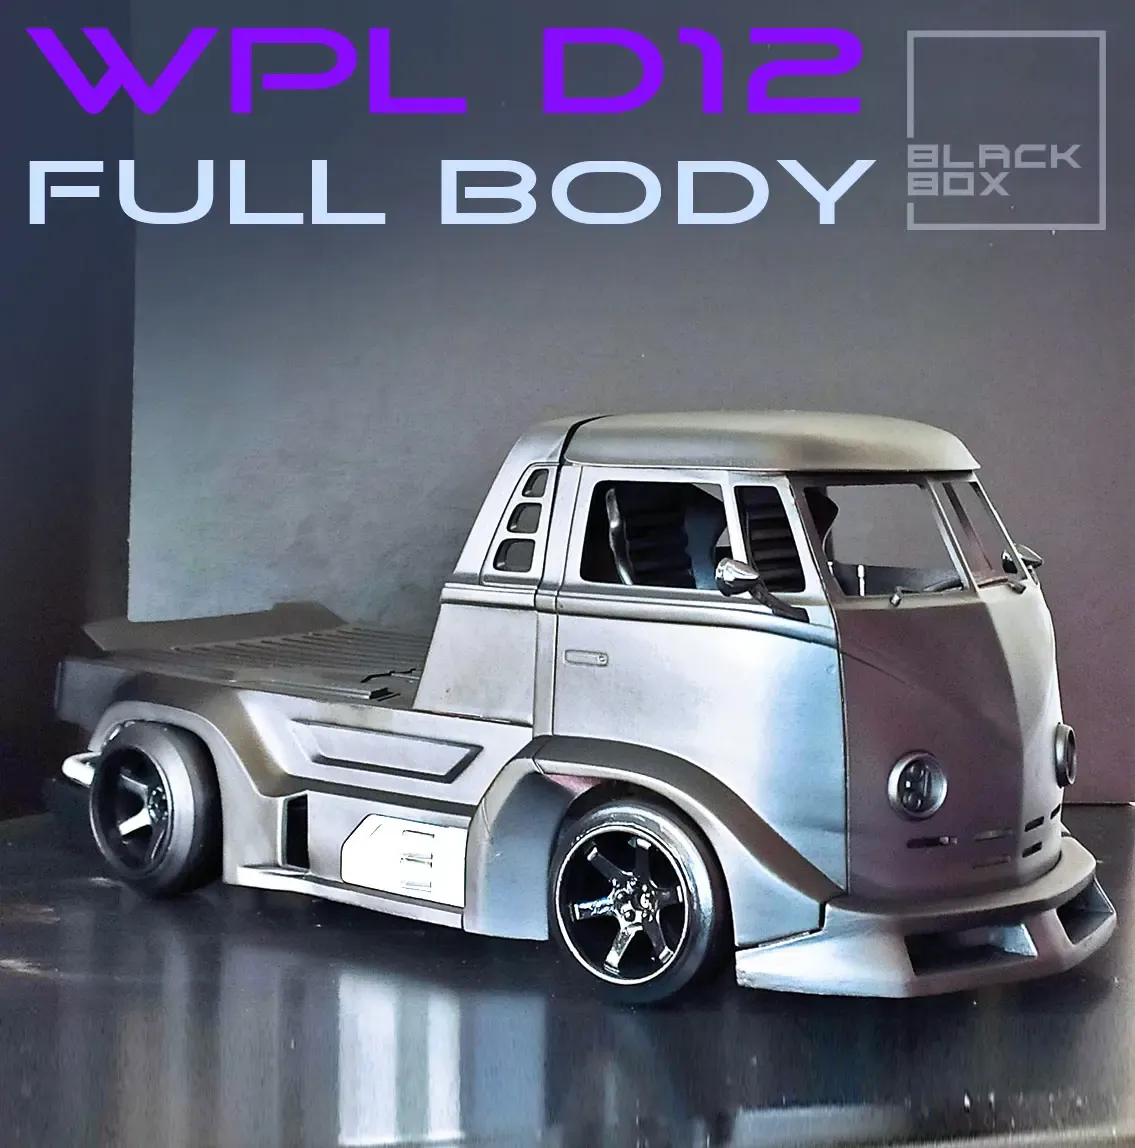 WPL D12 RC FULLBODY BY BLACKBOX